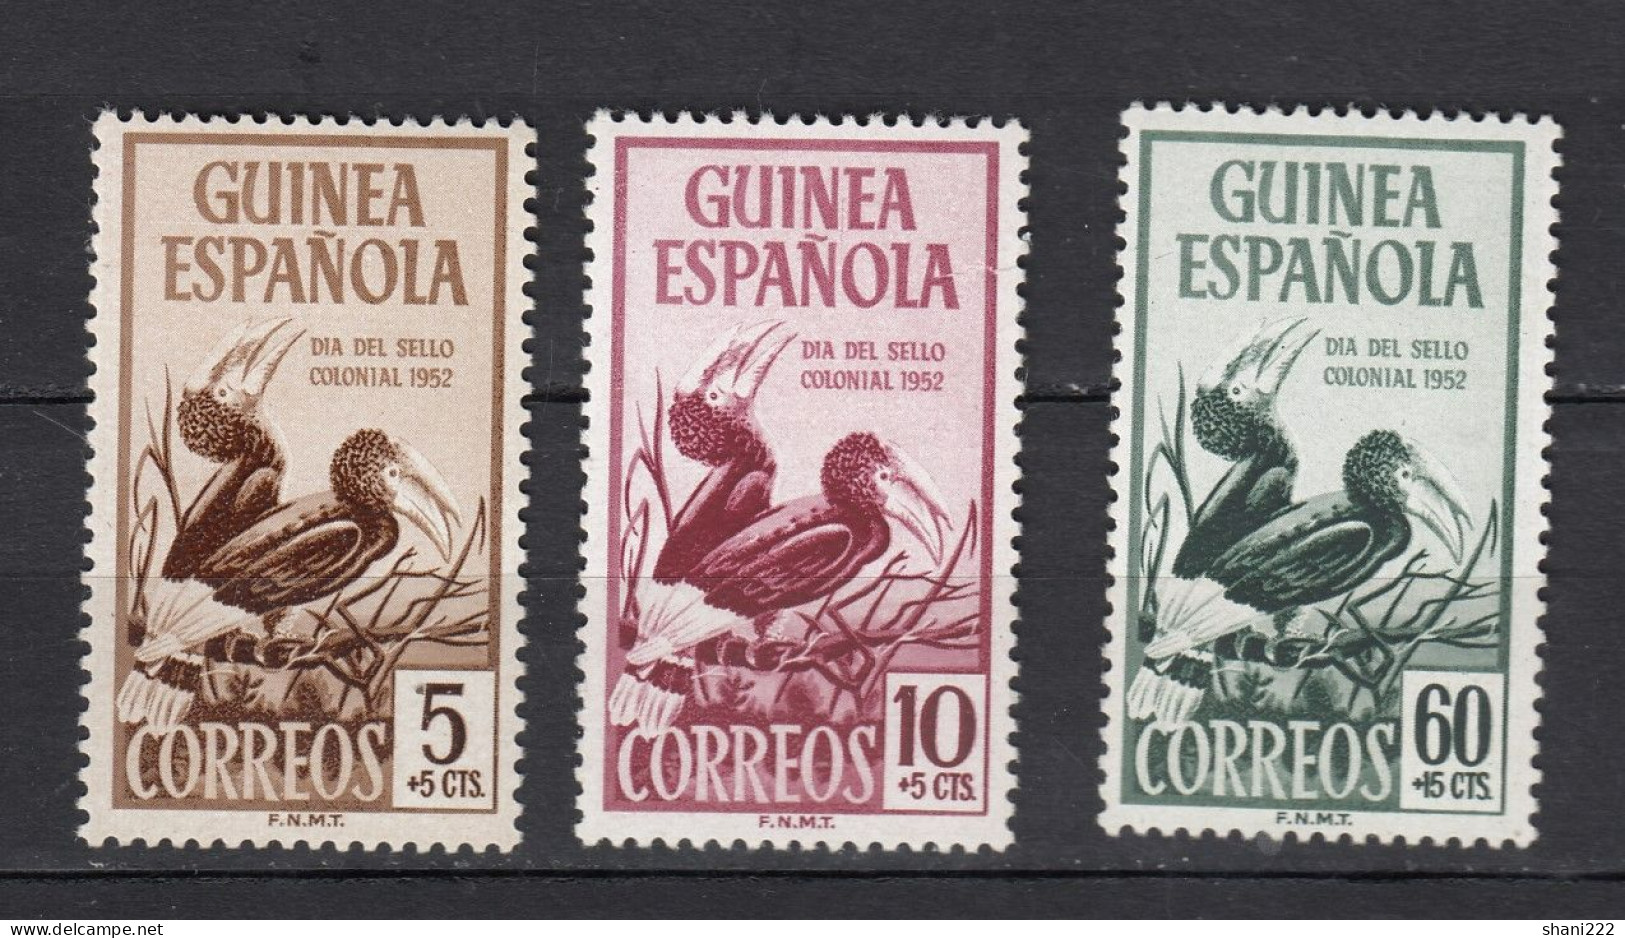 Spanish Guinea - 1952 Dia Del Sello Colonial - MNH (e-640) - Guinea Española